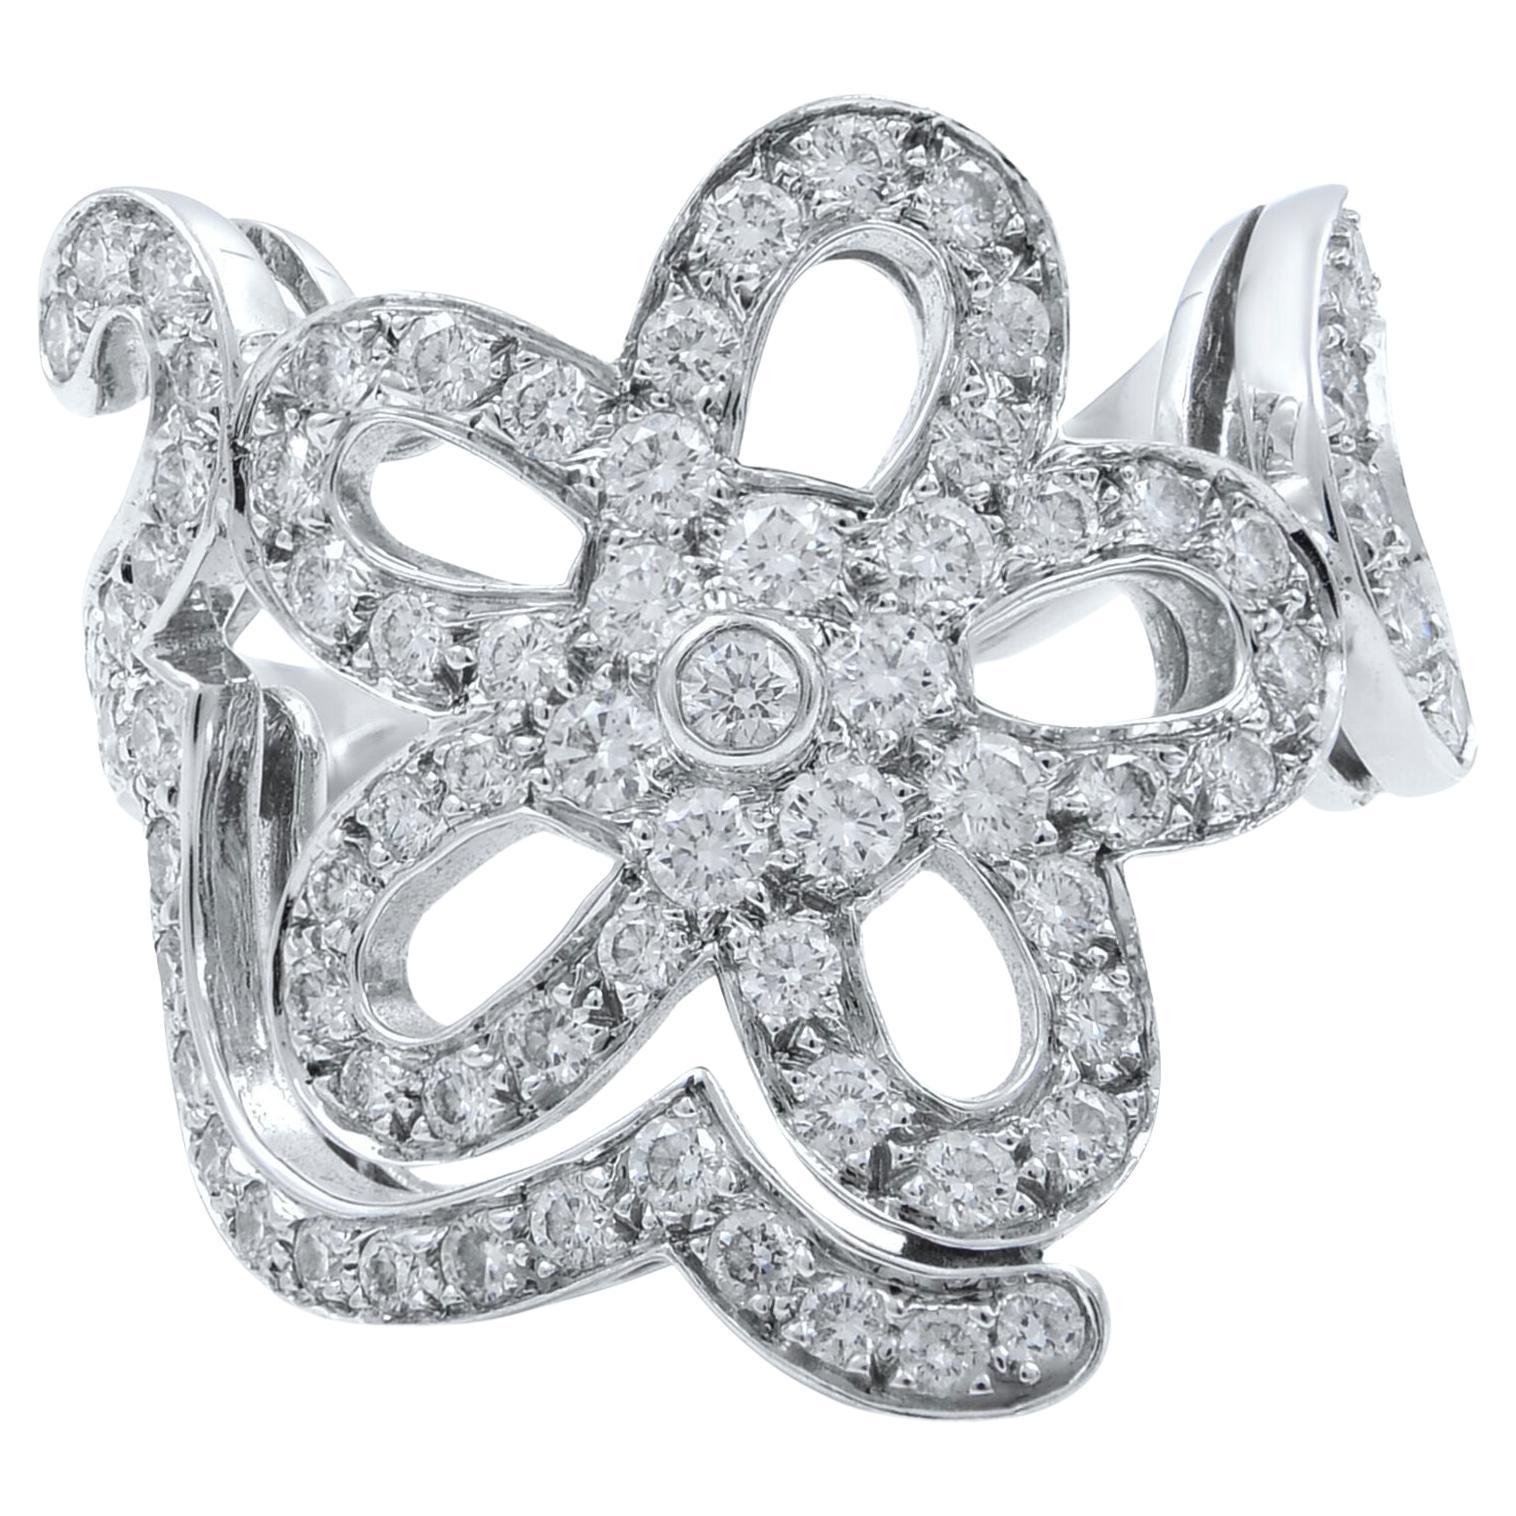 Van Cleef & Arpels Diamond Flower Cocktail Ring 18K White Gold 1.56Cttw Size 50 For Sale